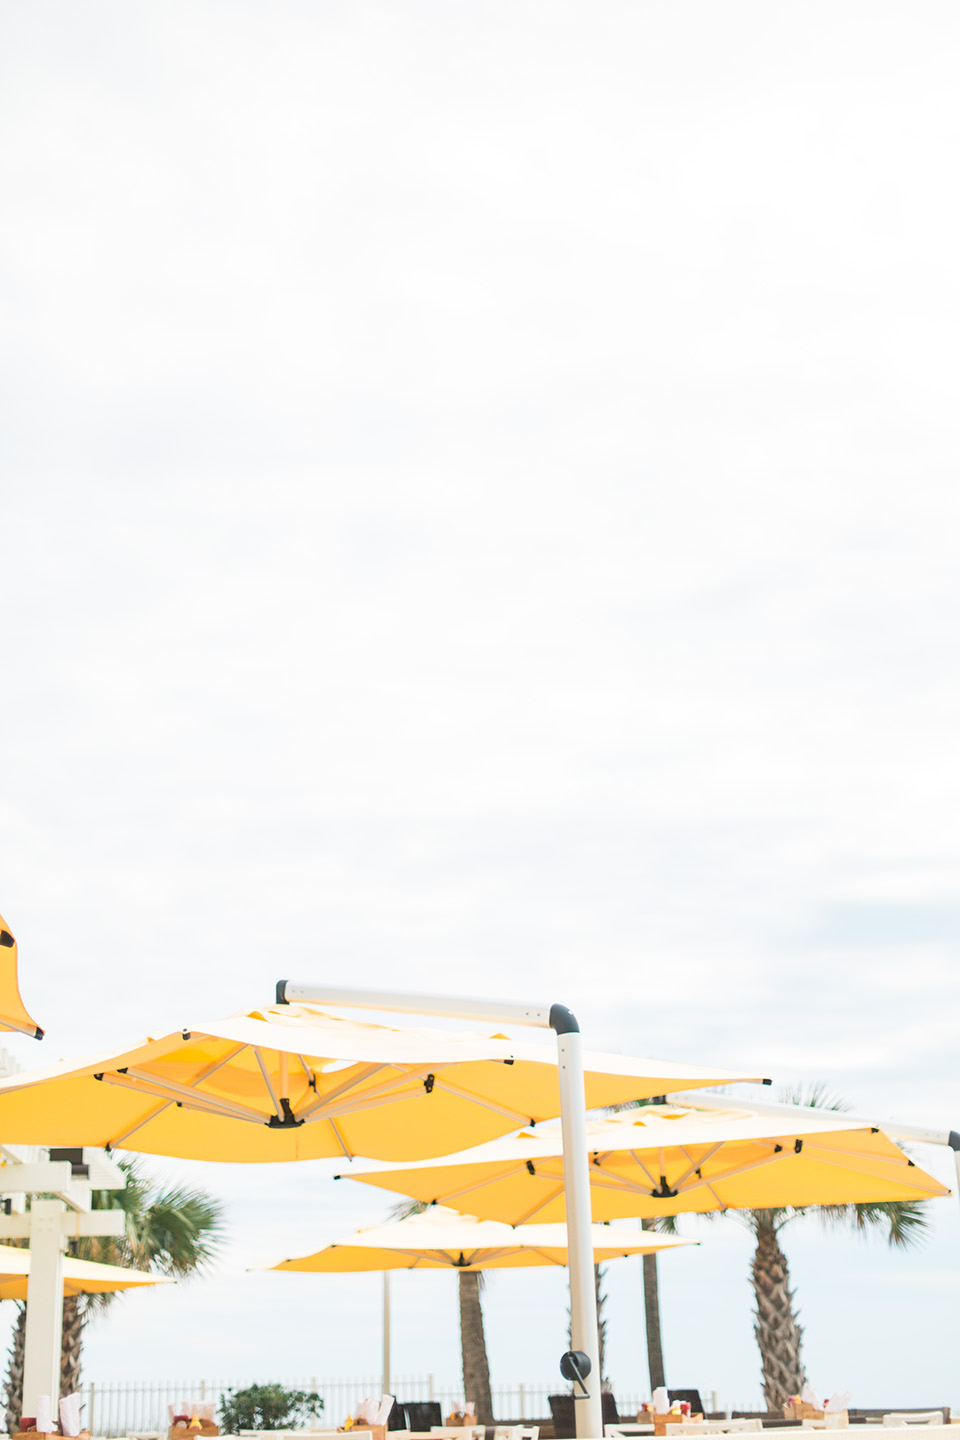 Image of bright yellow beach umbrellas at the Omni Amelia Island Plantation Resort.